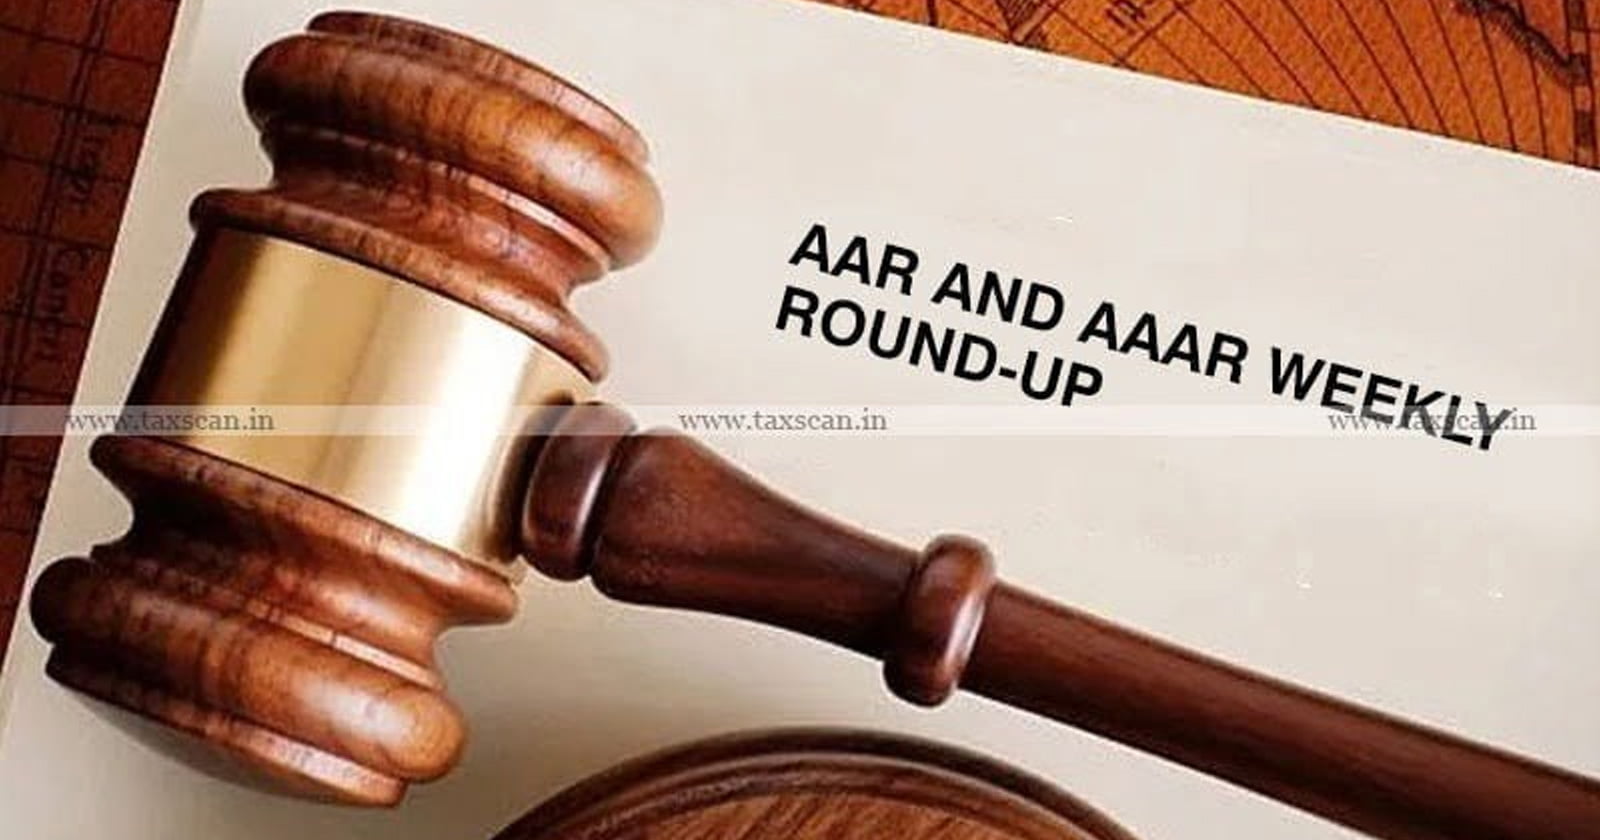 AAR - AAAR - AAR and AAAR Weekly Round Up - Weekly round up - TAXSCAN